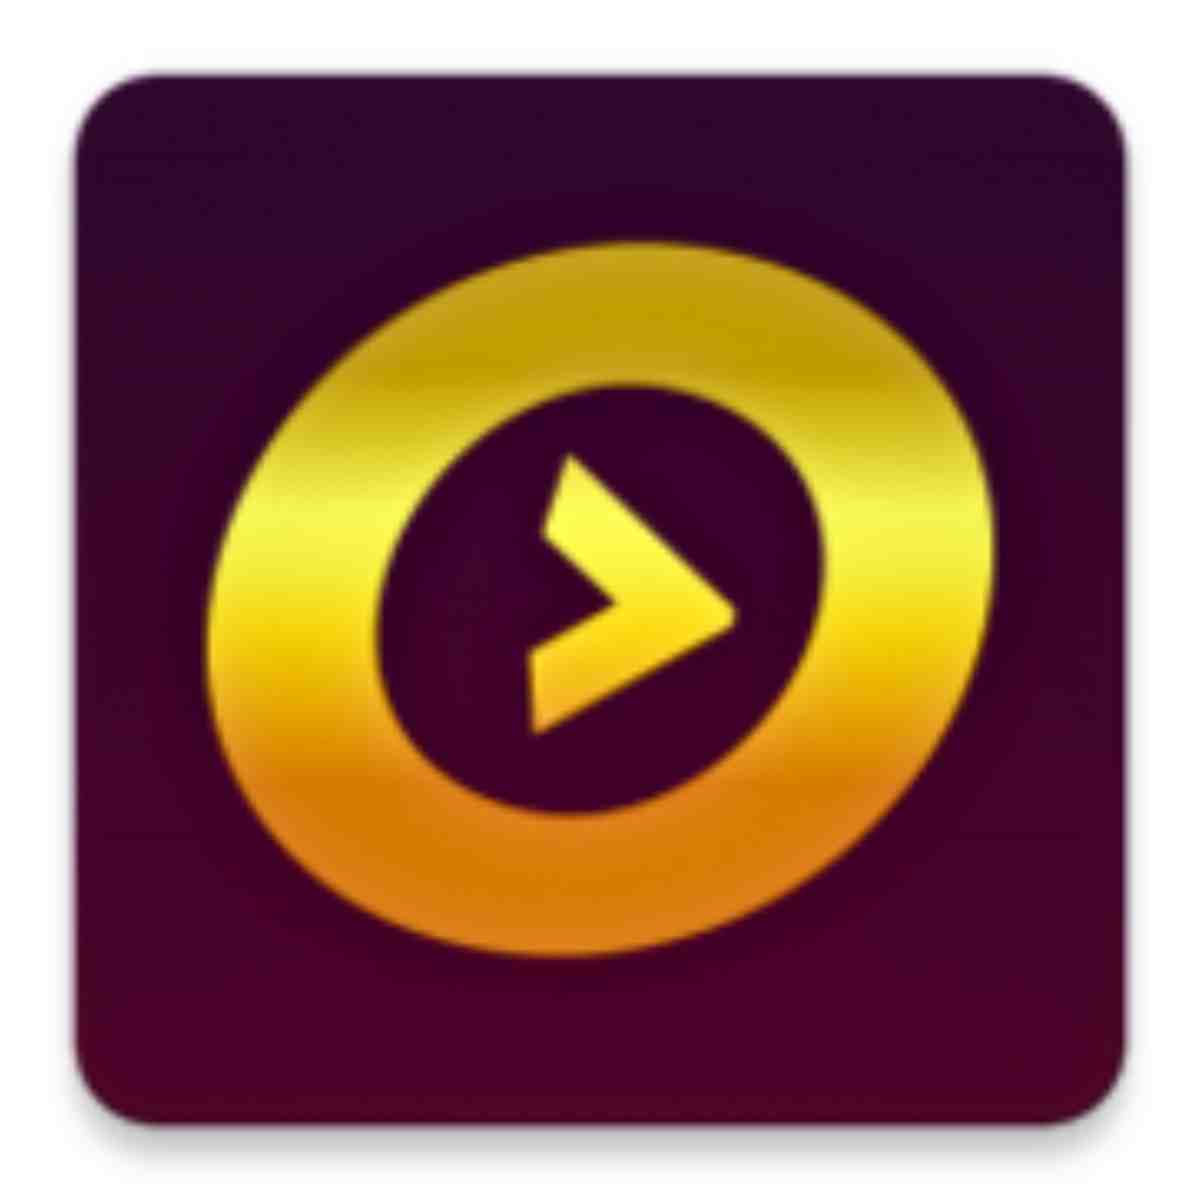 Winzo App, Winzo App Download, Winzo, Winzo Gold, Winzo Game, Winzo Apk, Winzo Download, Winzo Game App, Winzo Gold Download App, Winzo App Download ApkPure, www winzo gold com, Winzo Games com,